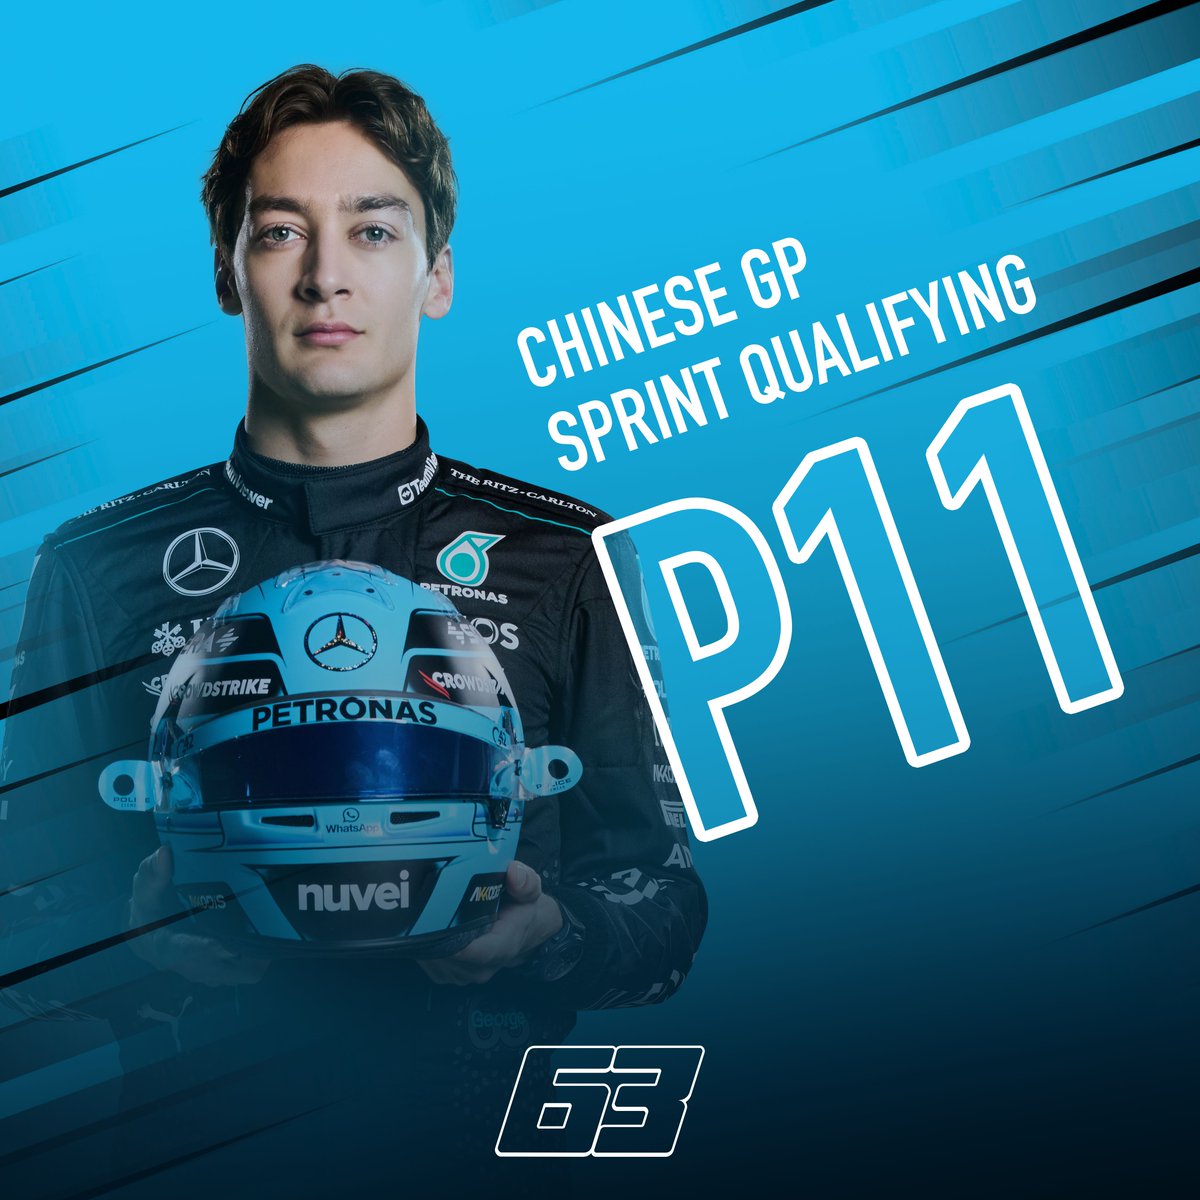 GR goes P11 in Sprint Qualifying. Forward focus to tomorrow 👊 #GR63 #F1 #Formula1 #FormulaOne #Motorsport #ChineseGP